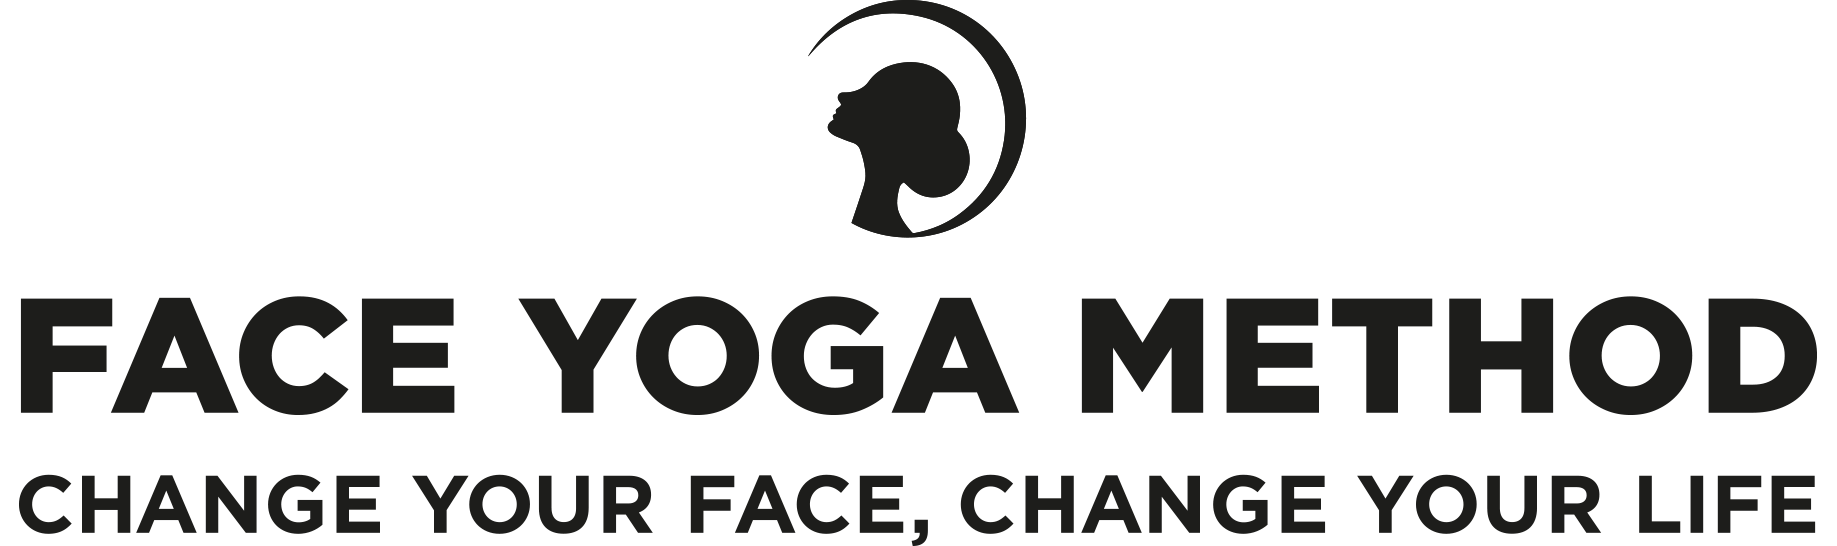 Face Yoga Method